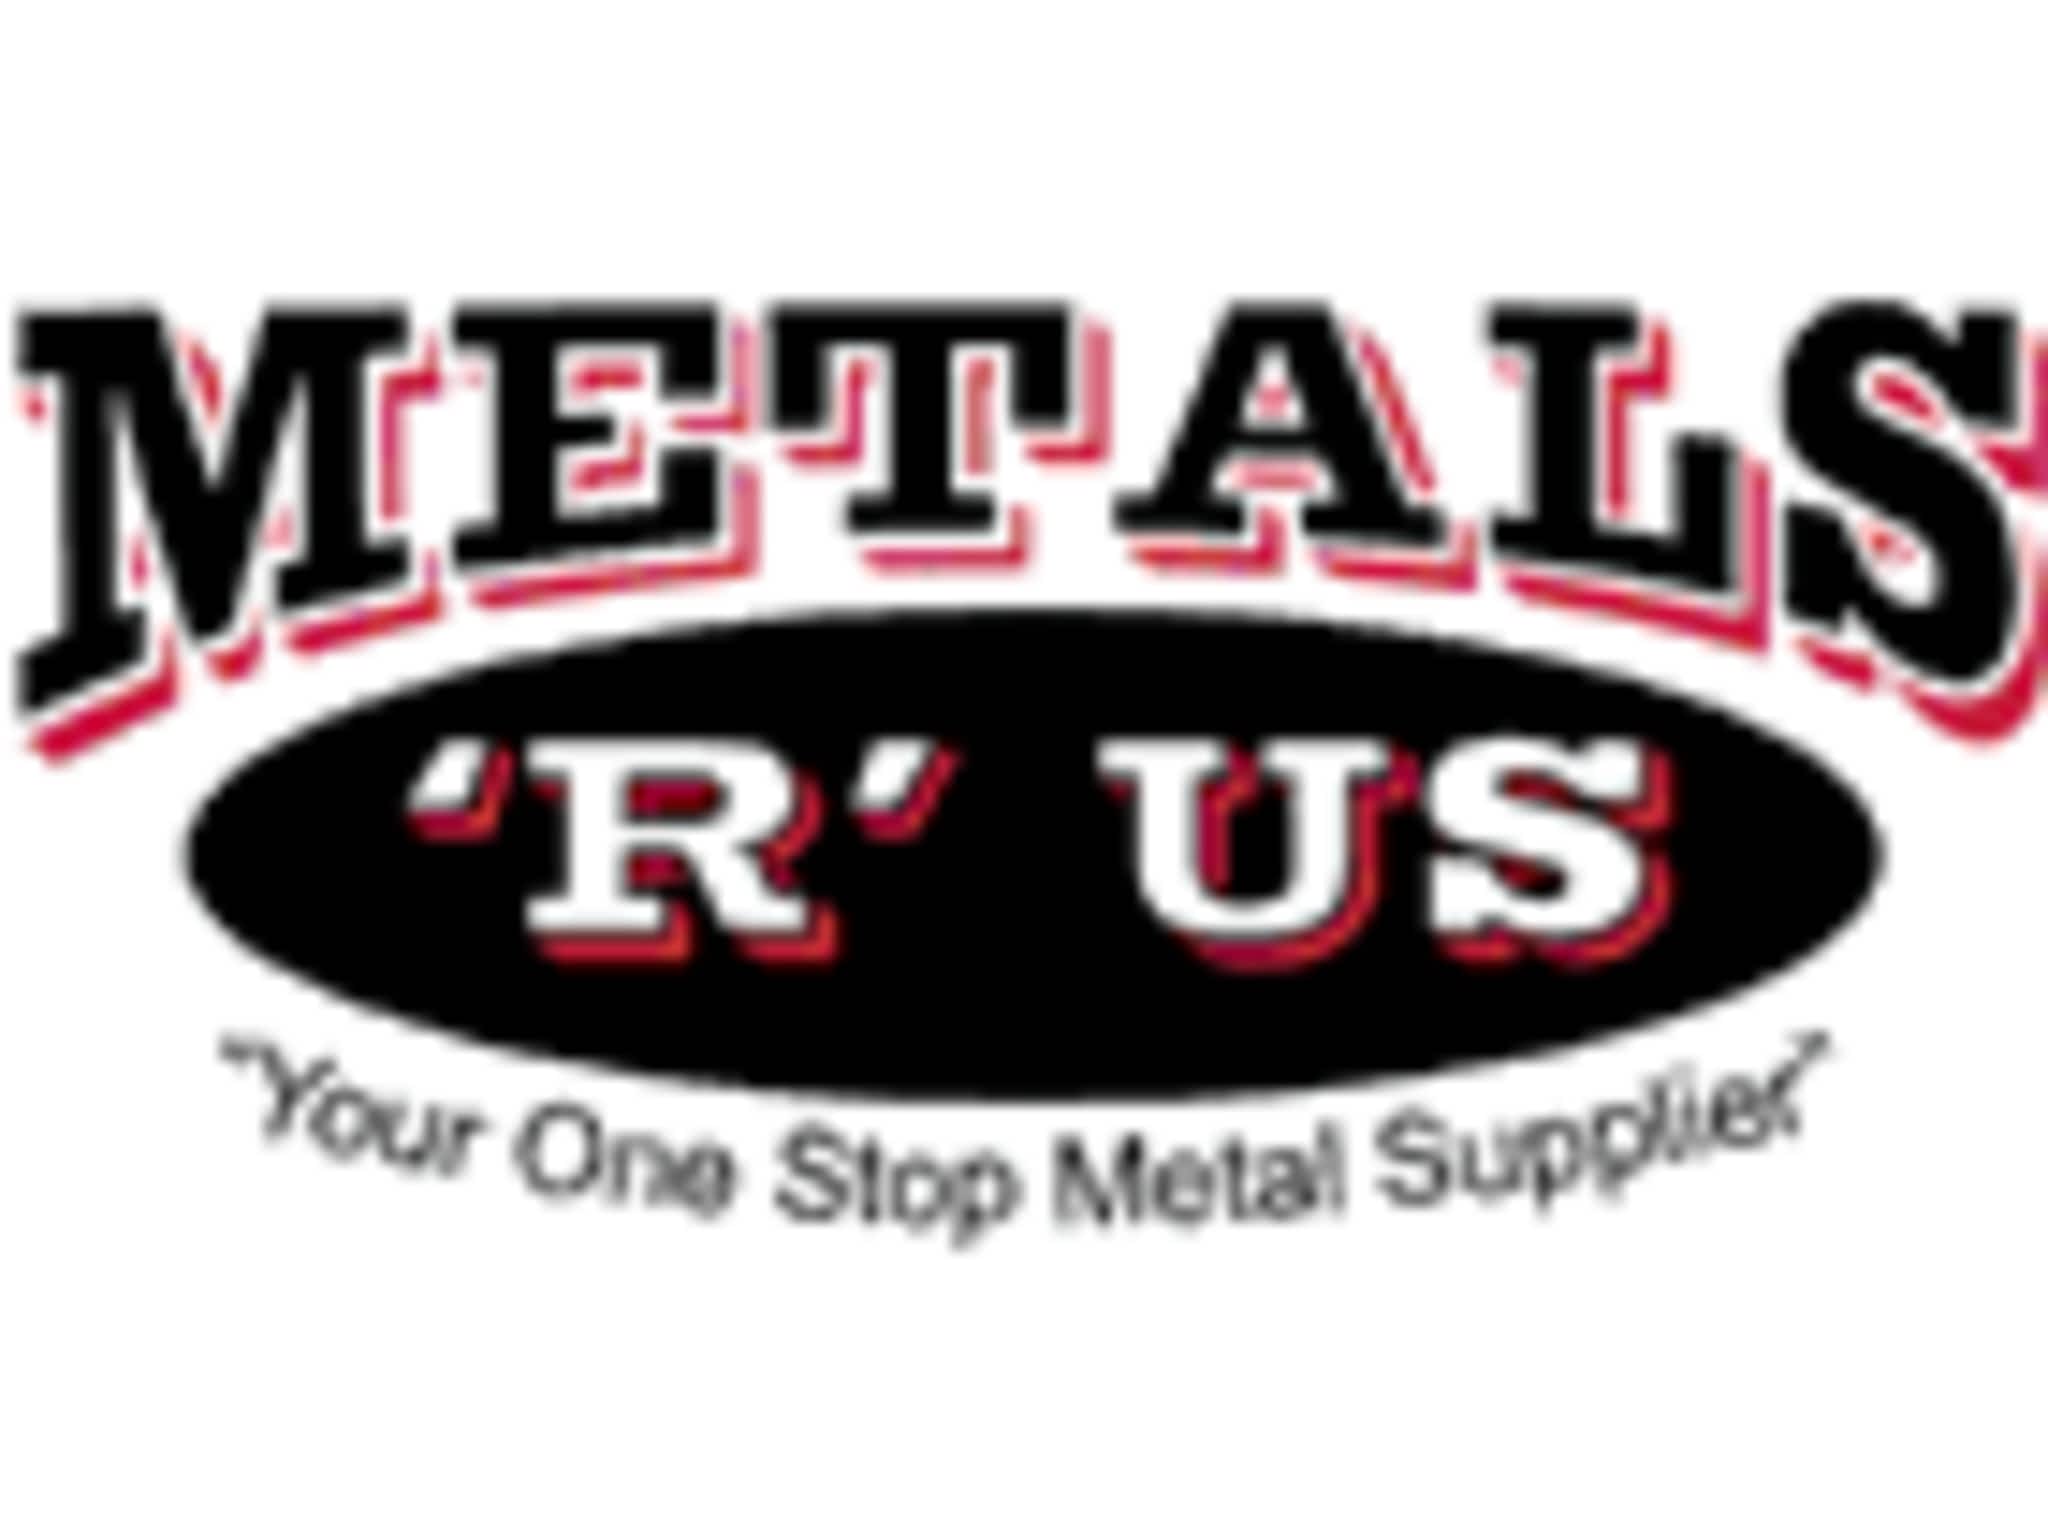 photo Metals 'R' Us